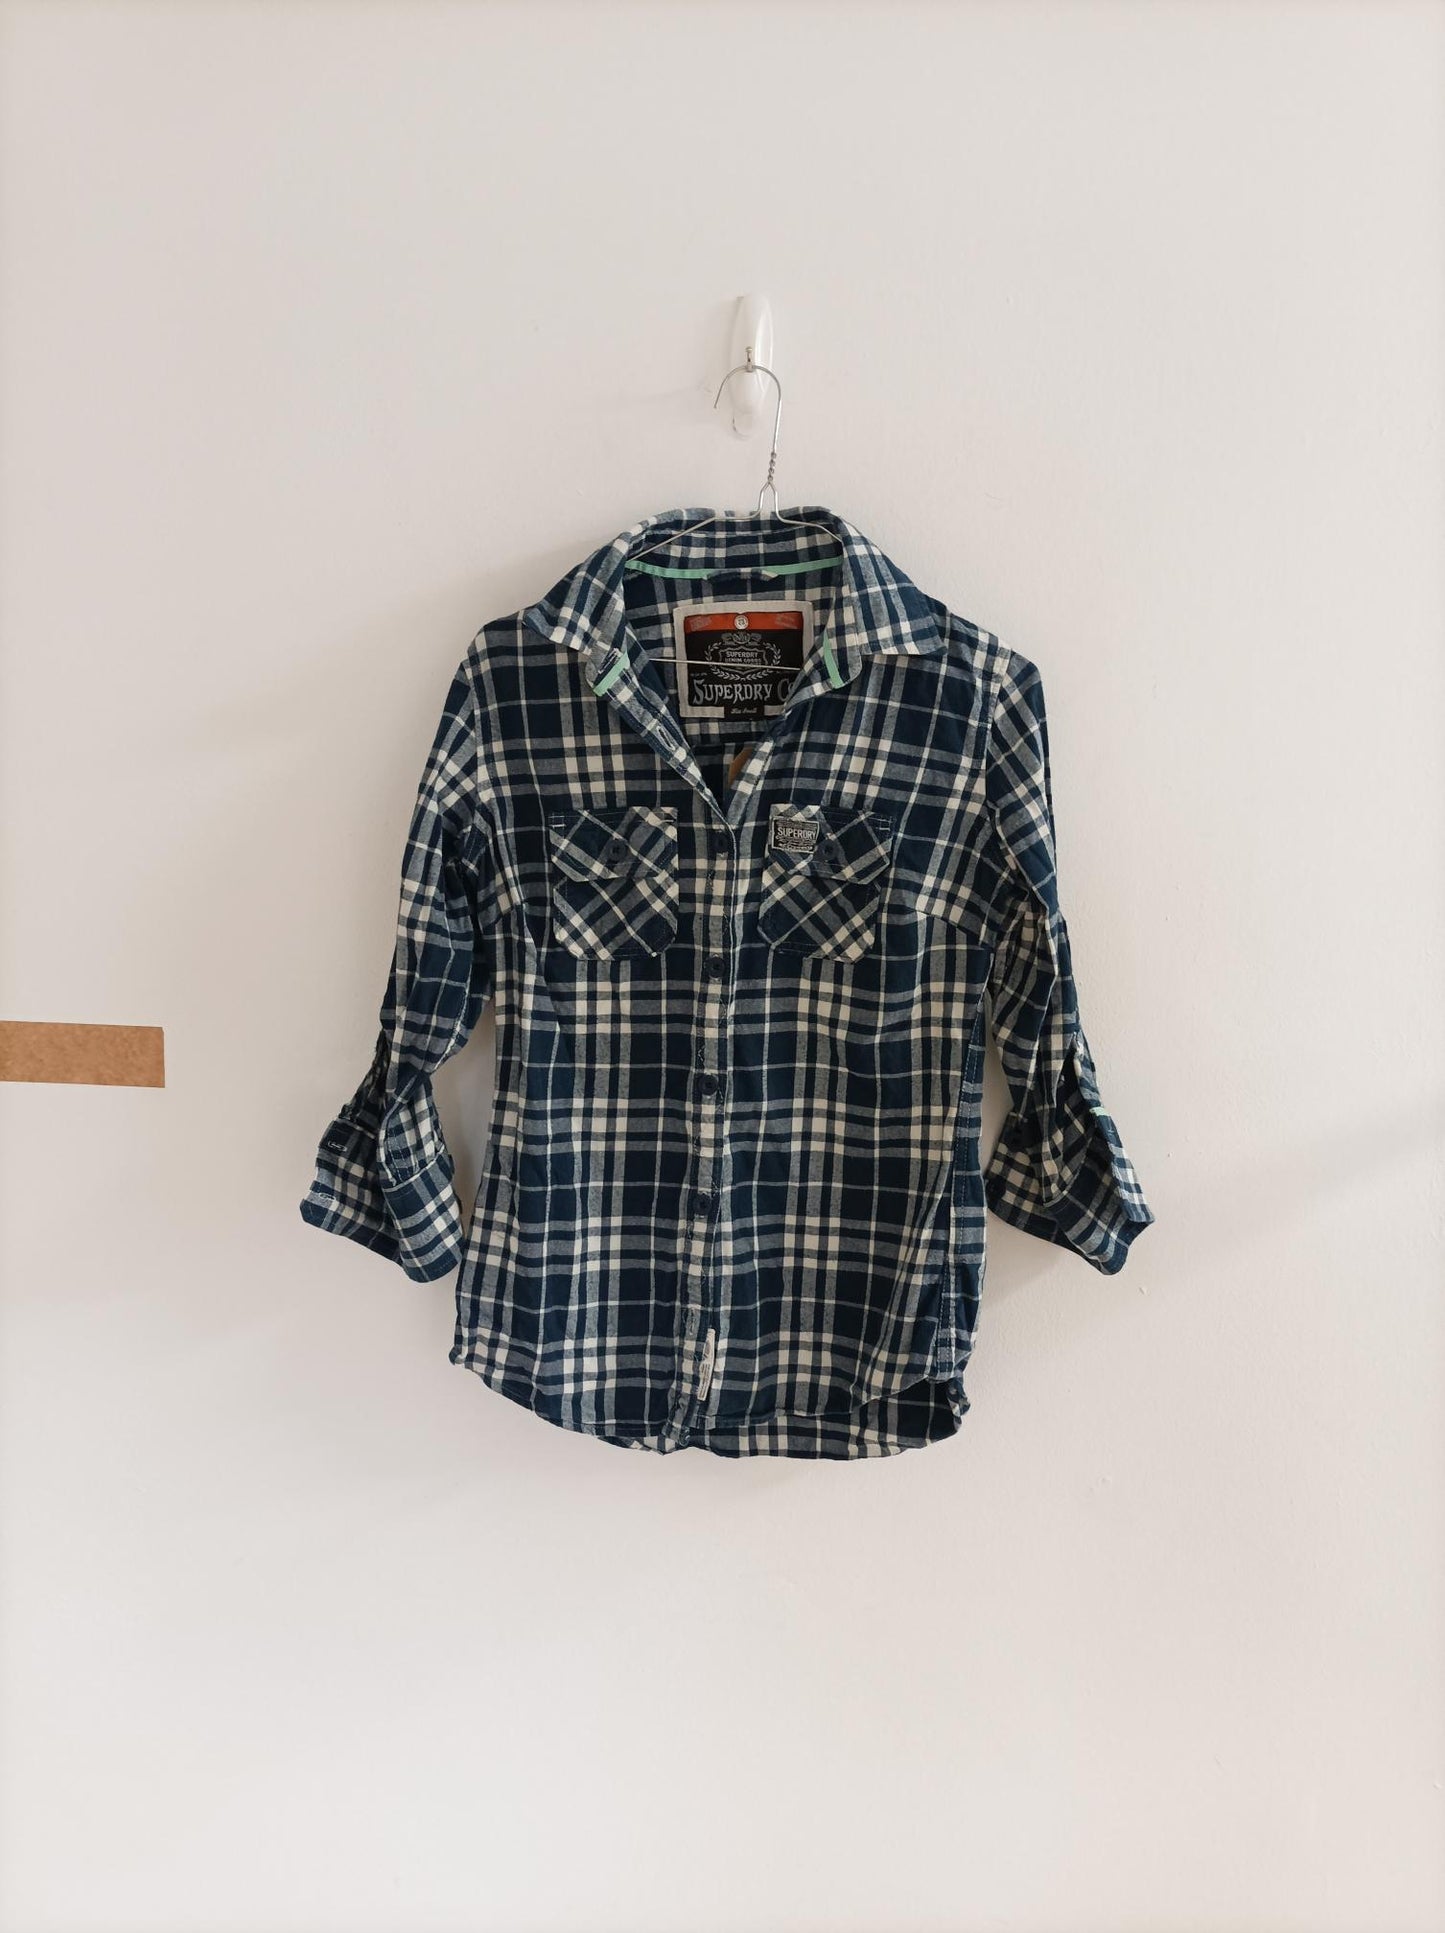 Blue Check Button Up Shirt, Superdry, Size 10 (Cotton)